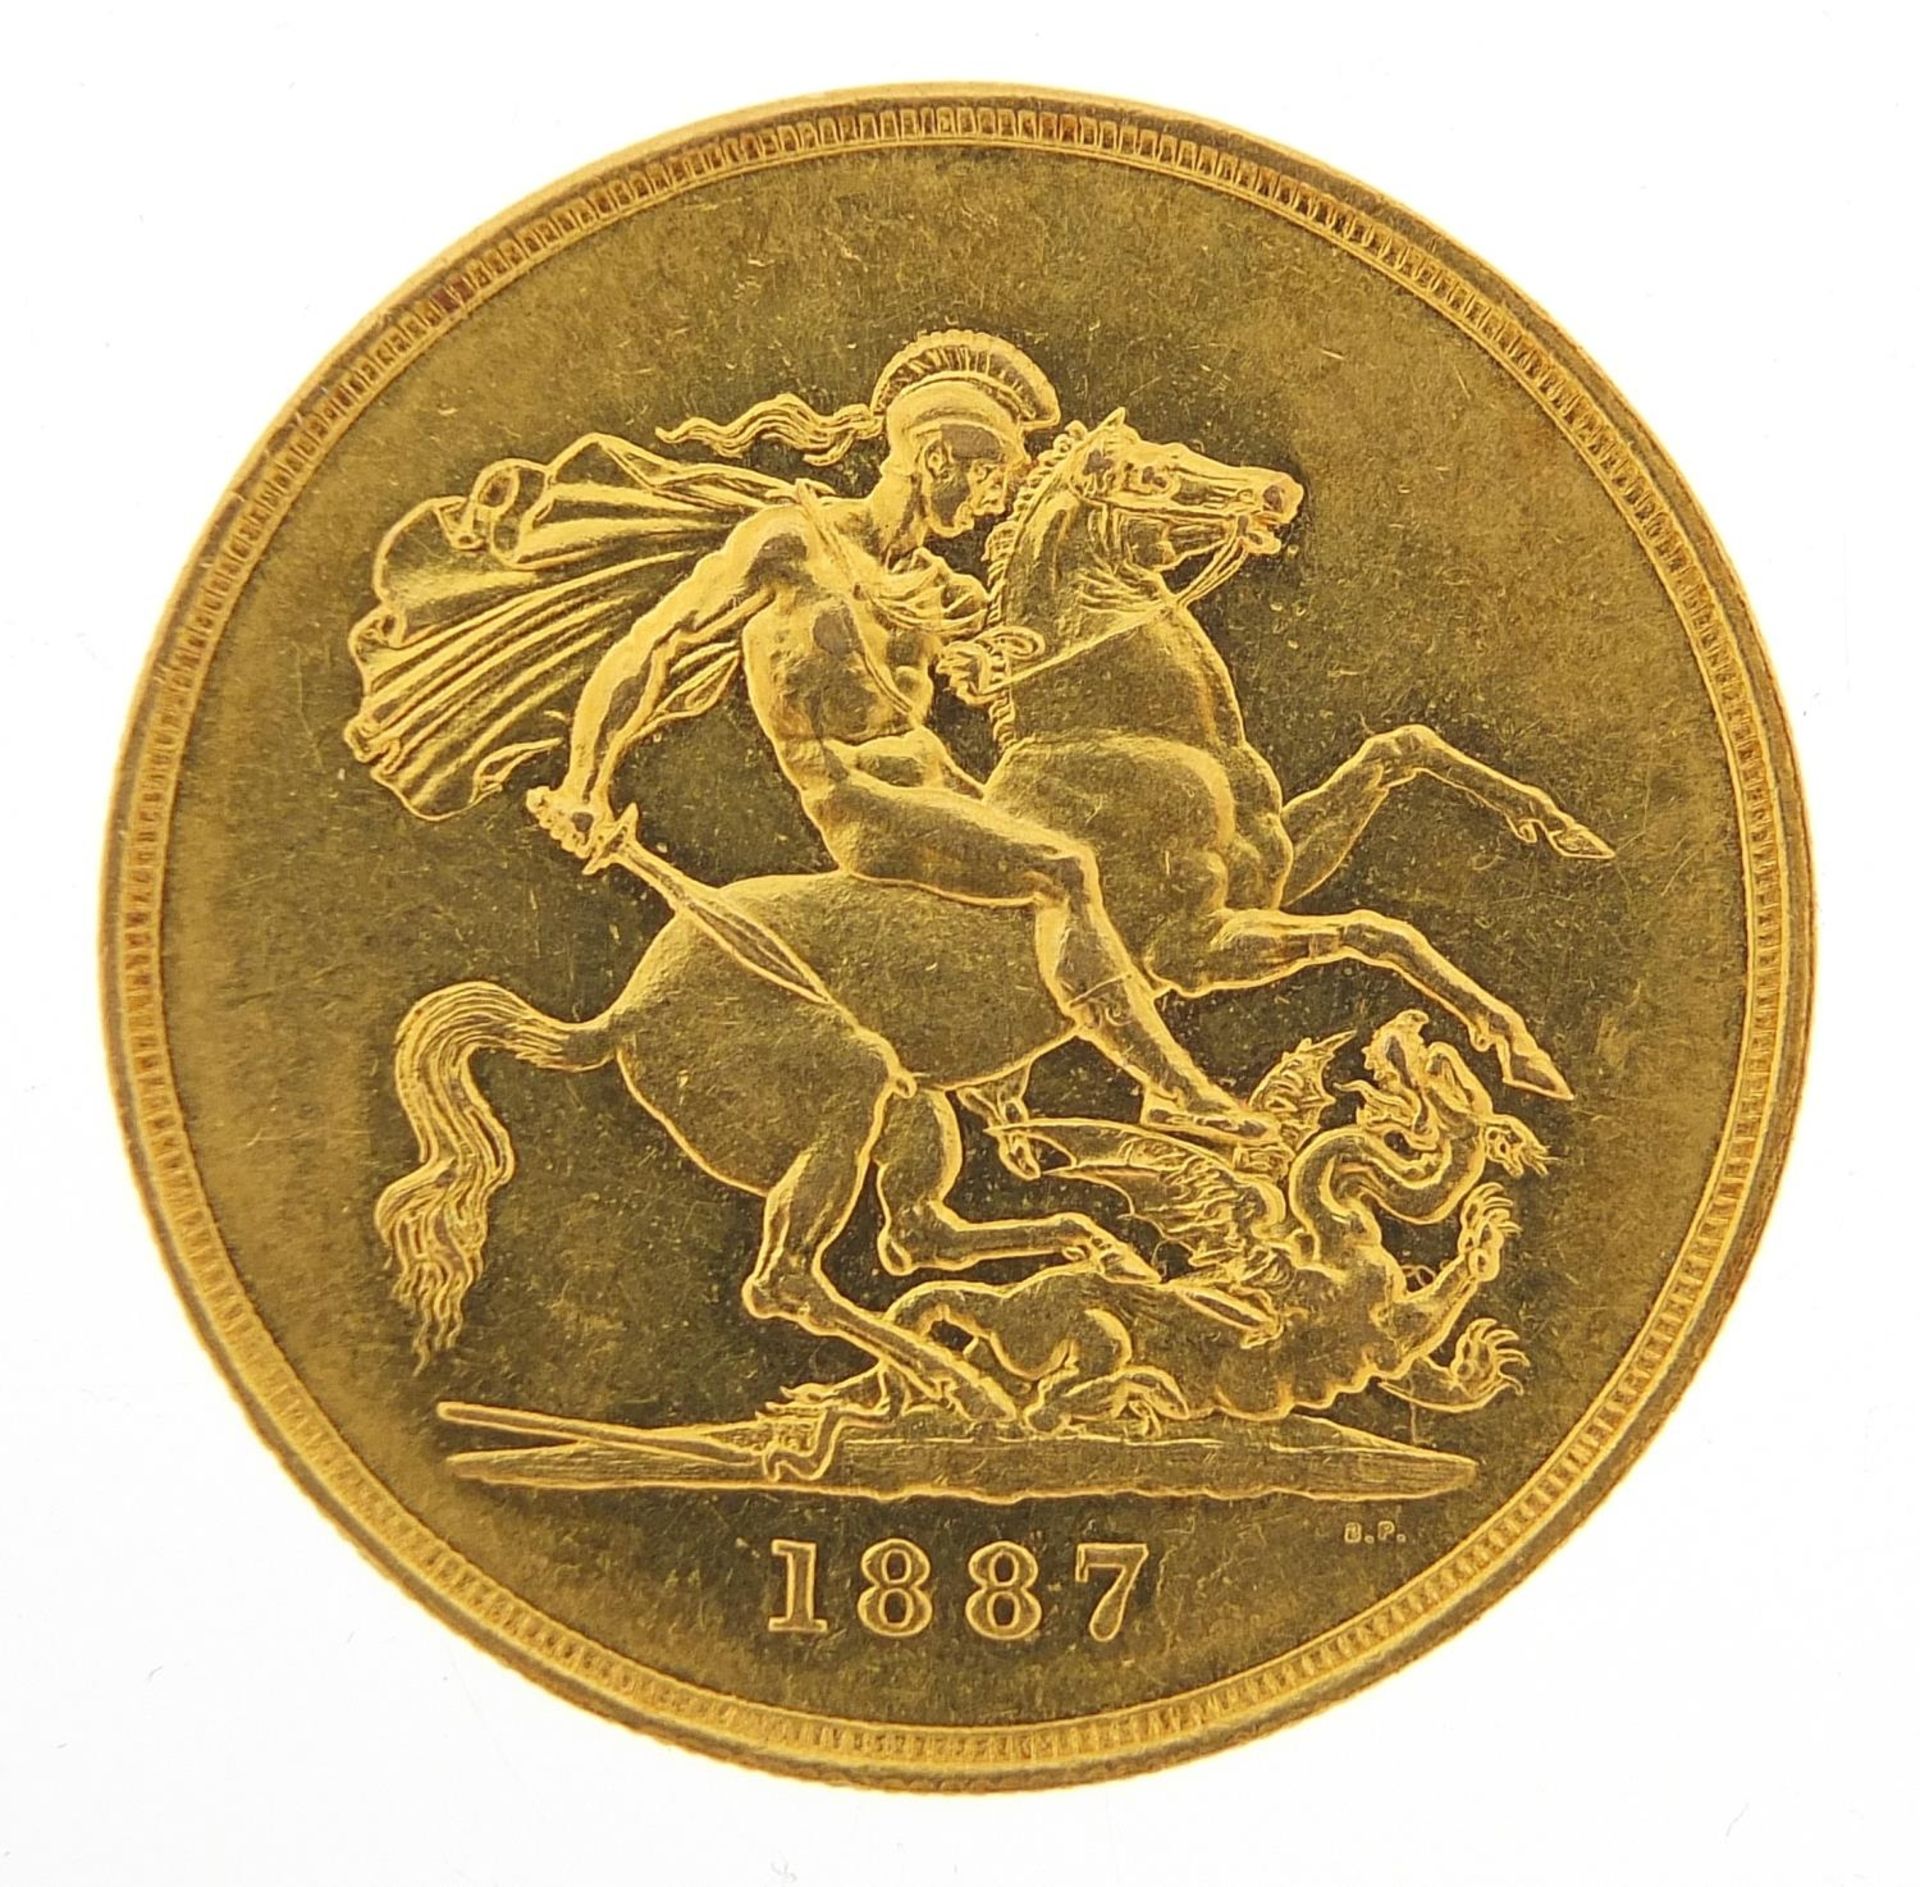 Queen Victoria Jubilee Head 1887 five pound coin